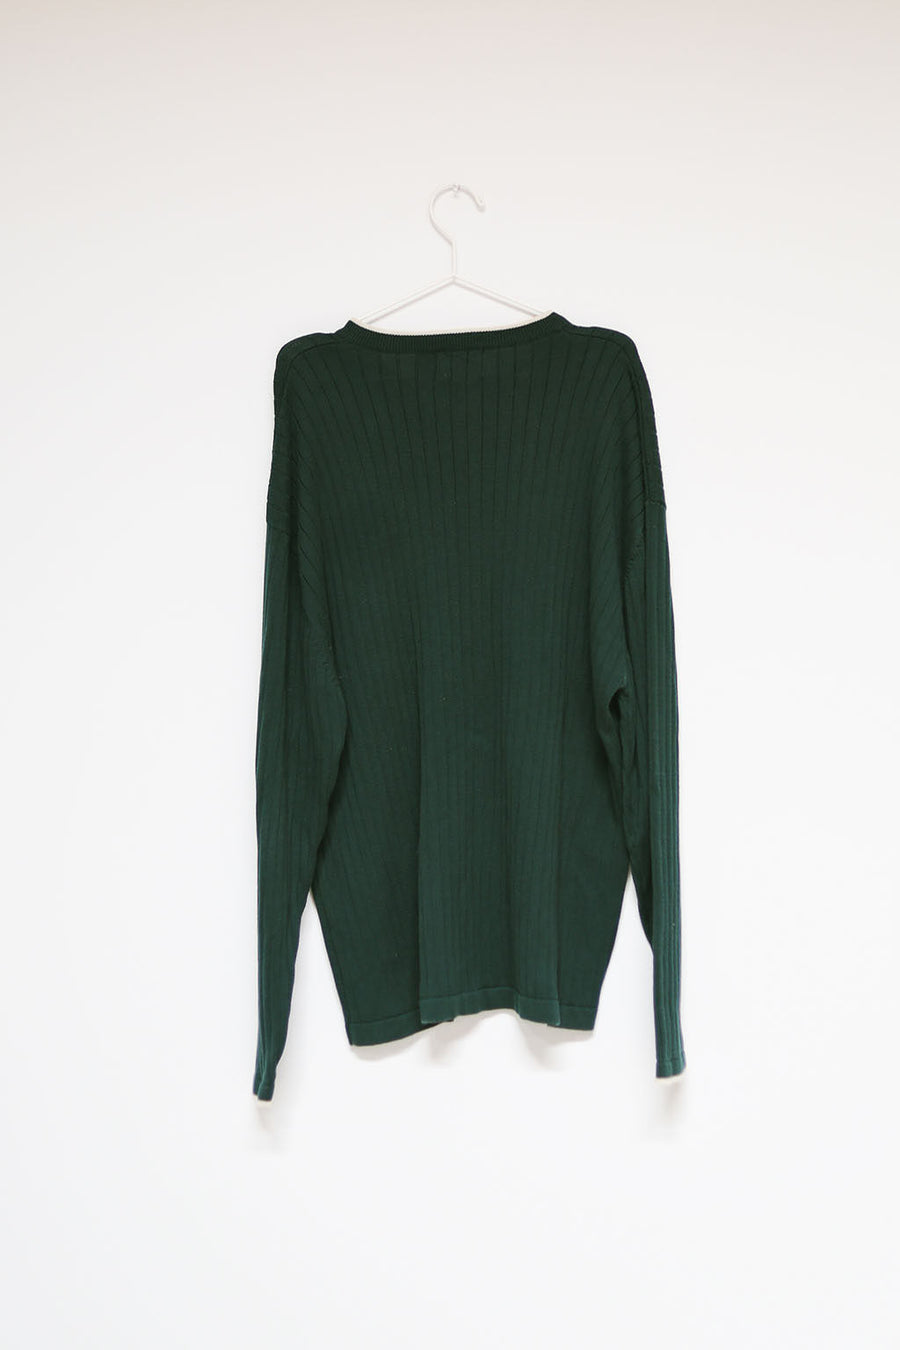 High Sierra Sweater by Luna B Vintage